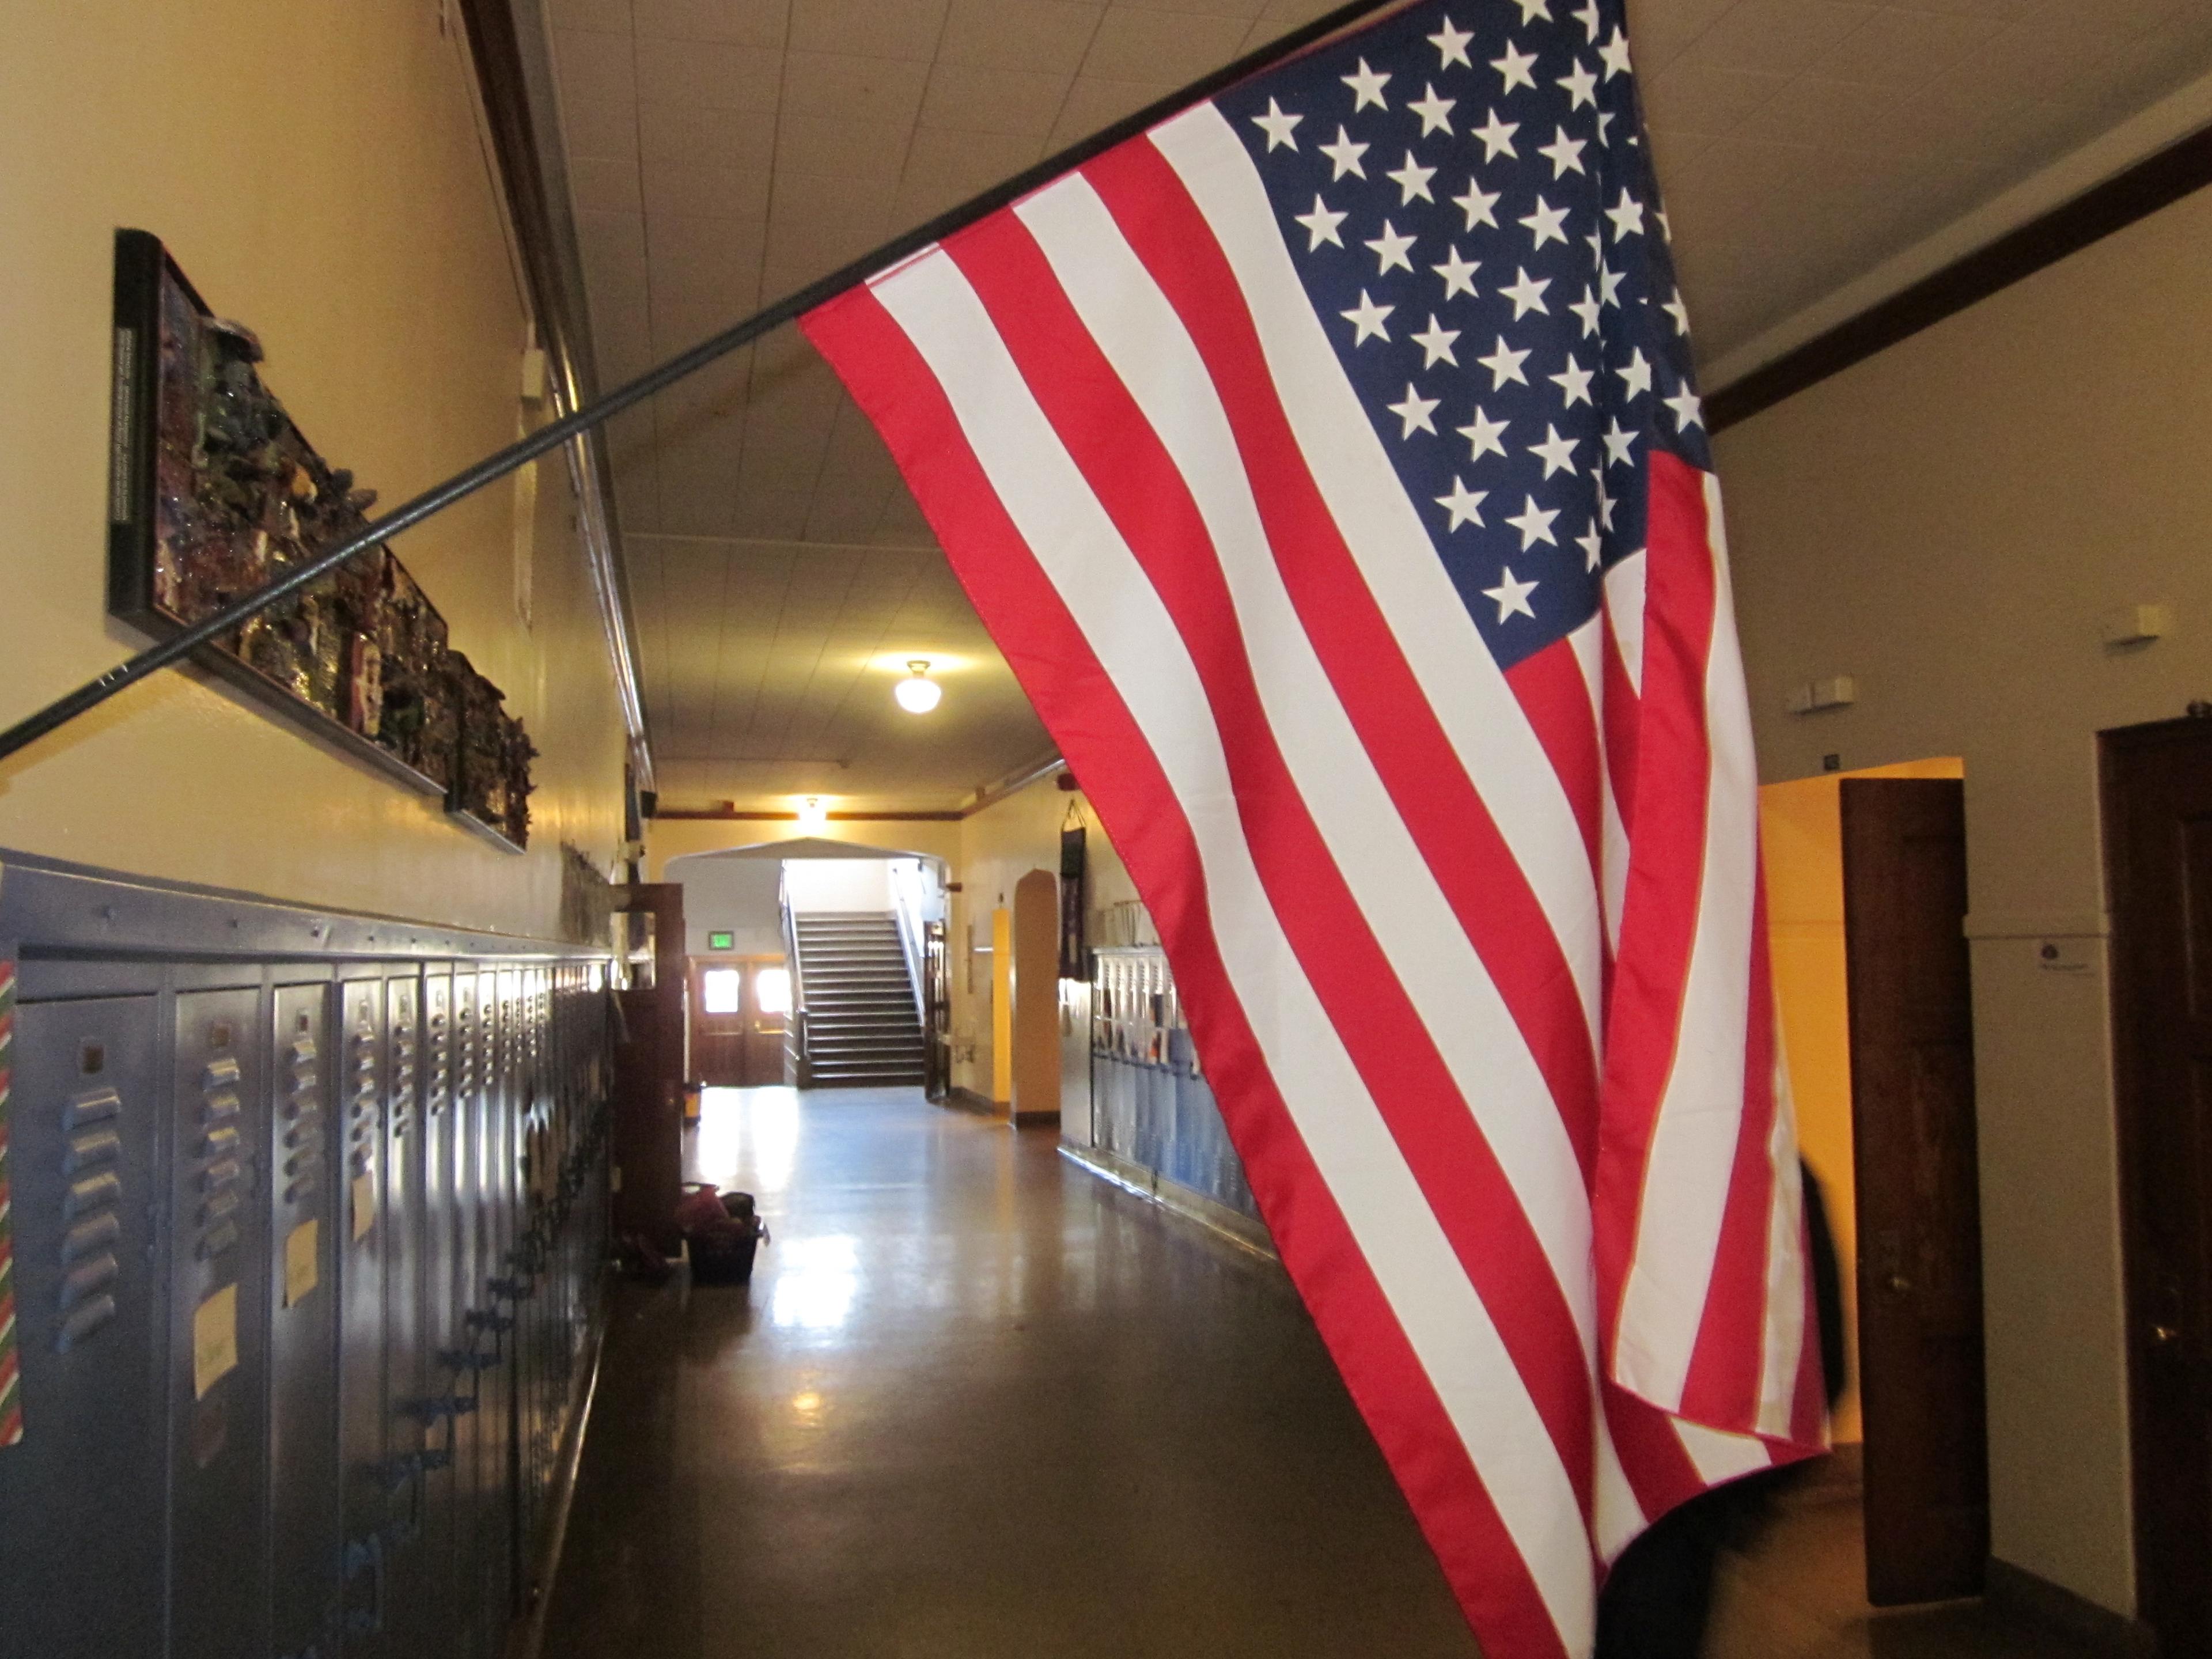 Photo: School hallway, flag